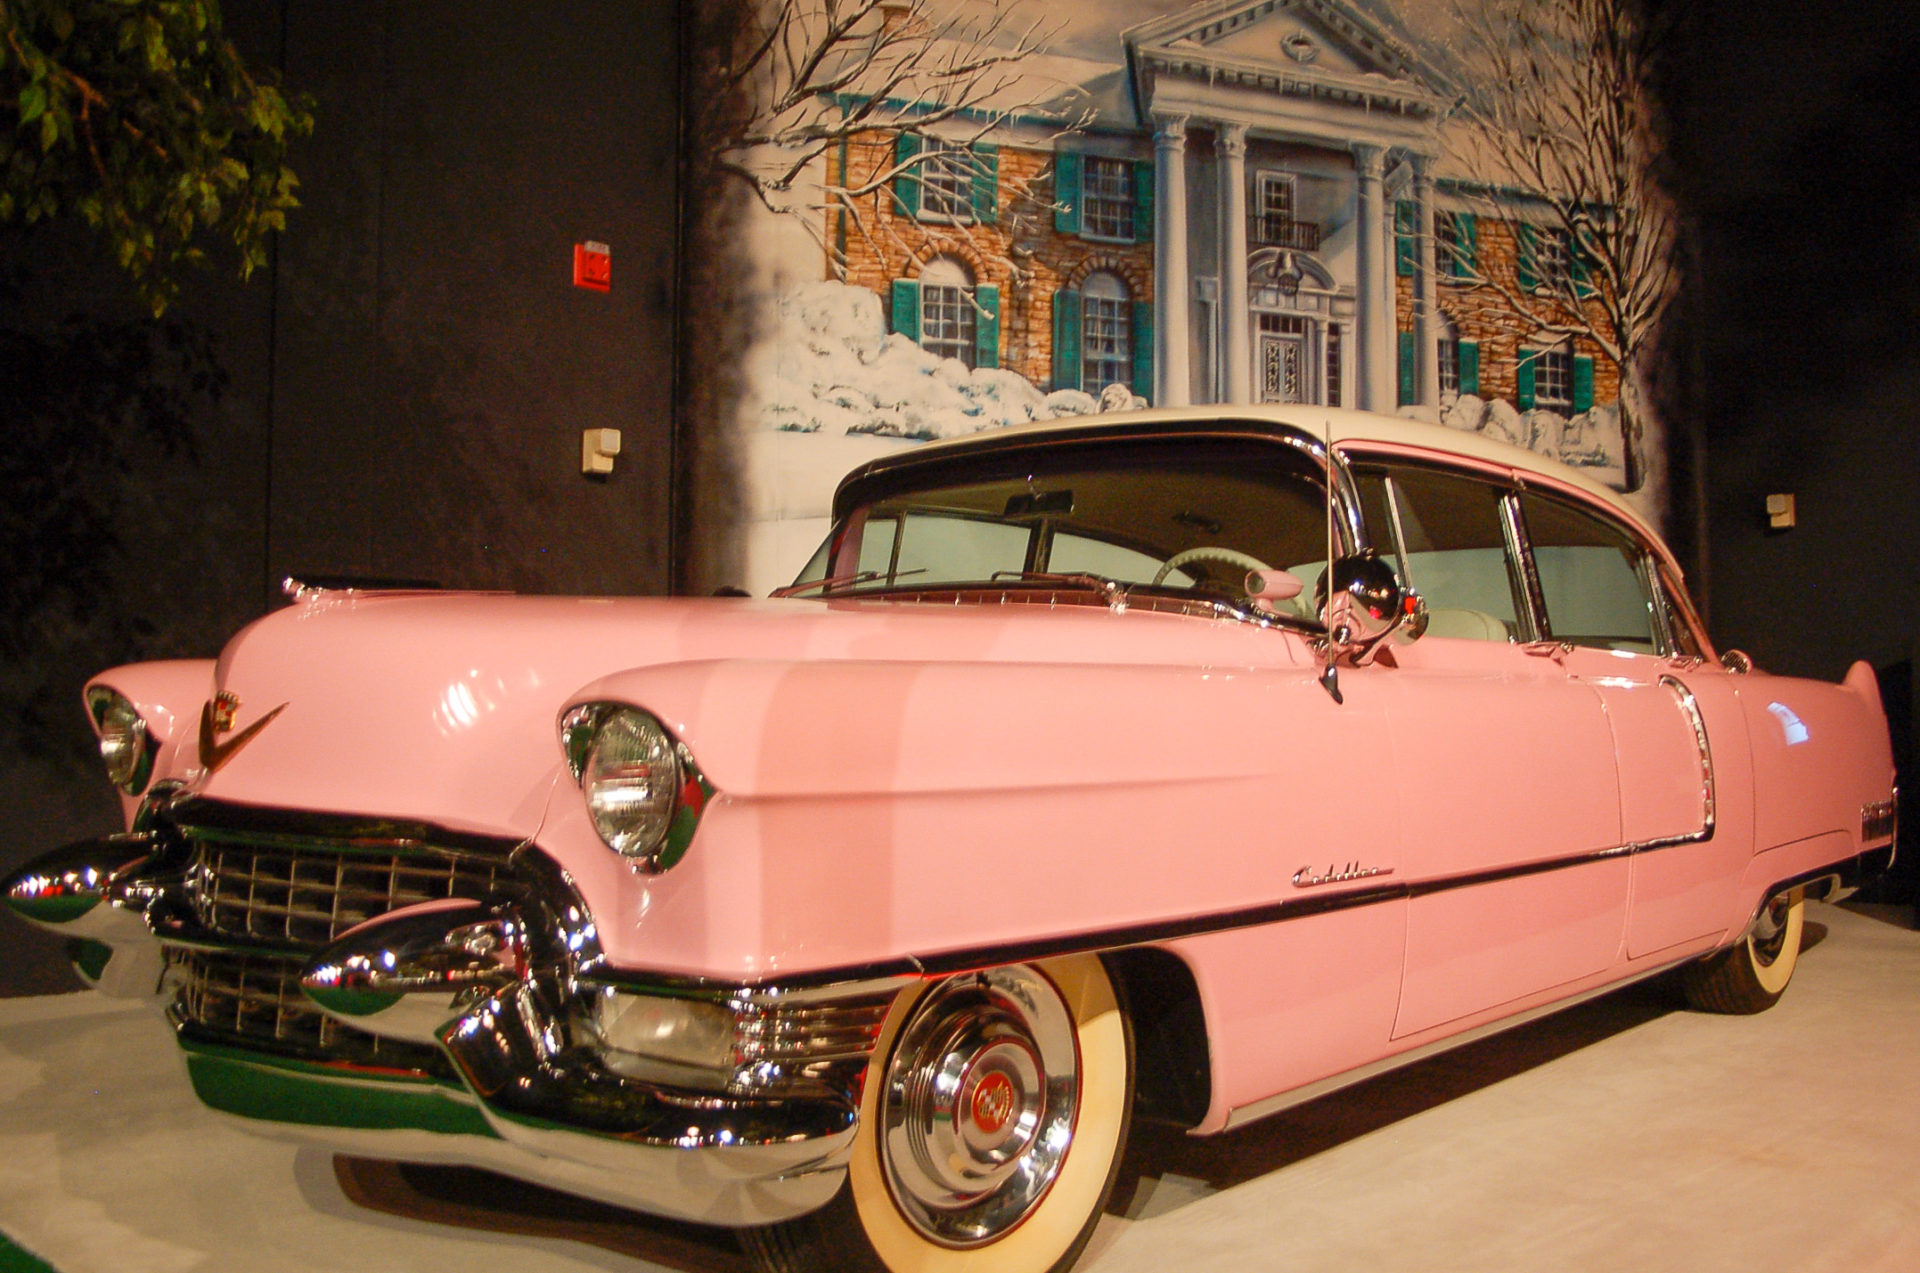 Pinker Cadillac mit kitschigem Graceland-Bild in Memphis